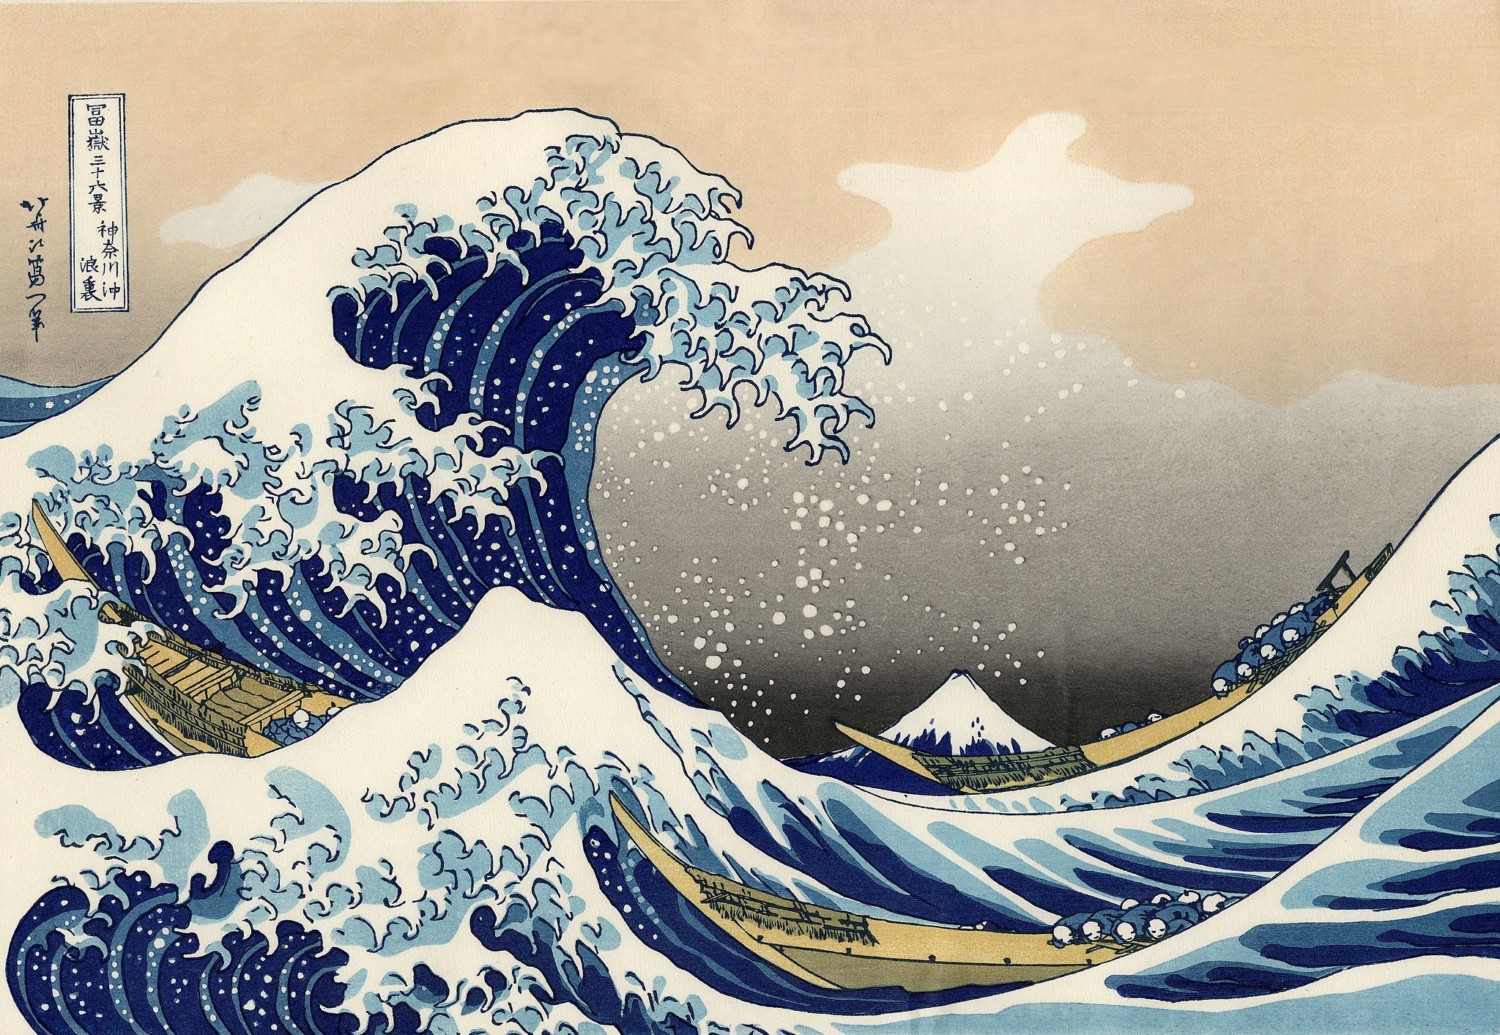 Katsushika Hokusai painting The Great Wave Off Kanagawa